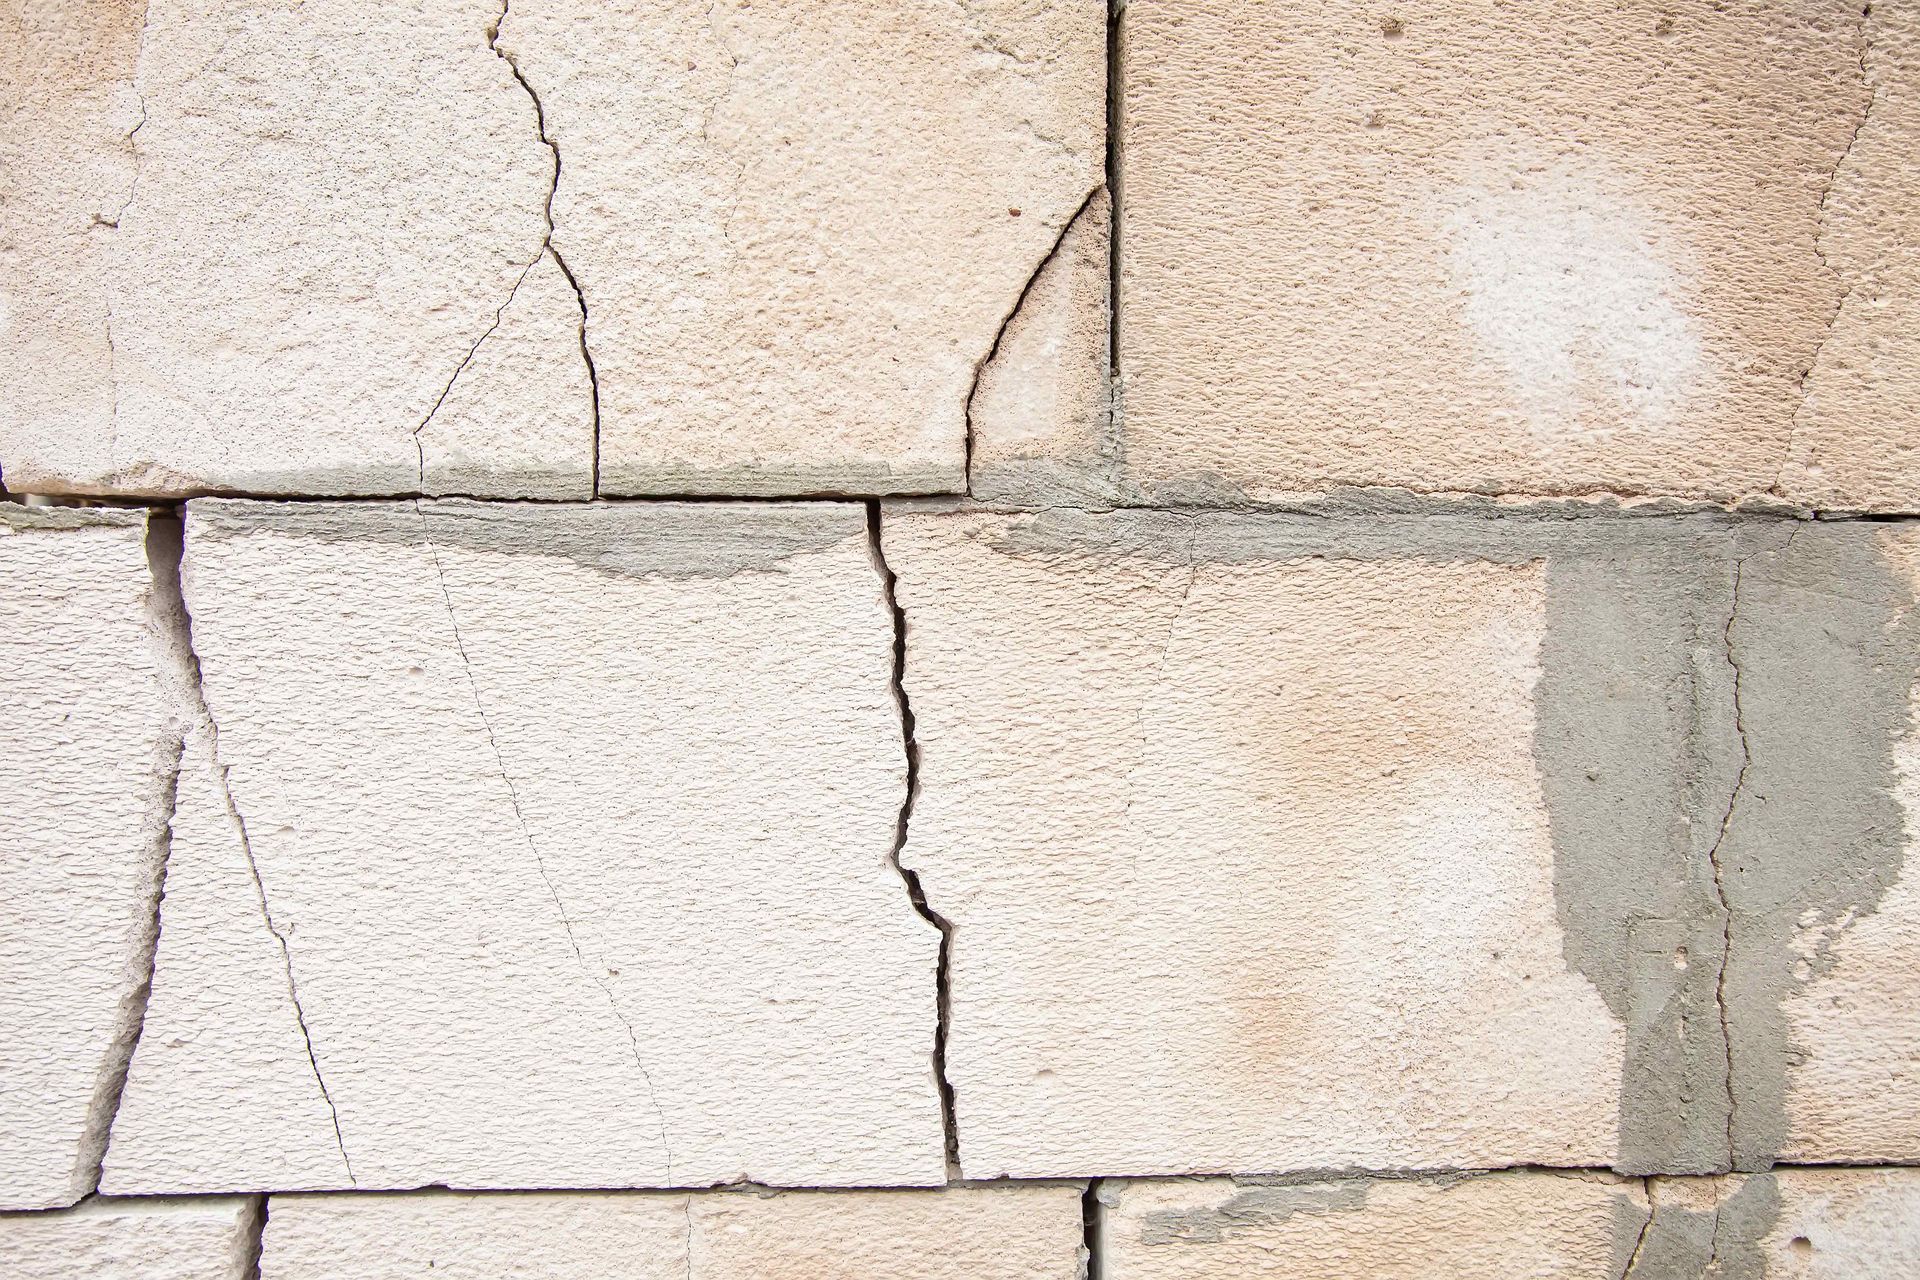 Spiderweb cracks make their way through a brick wall.